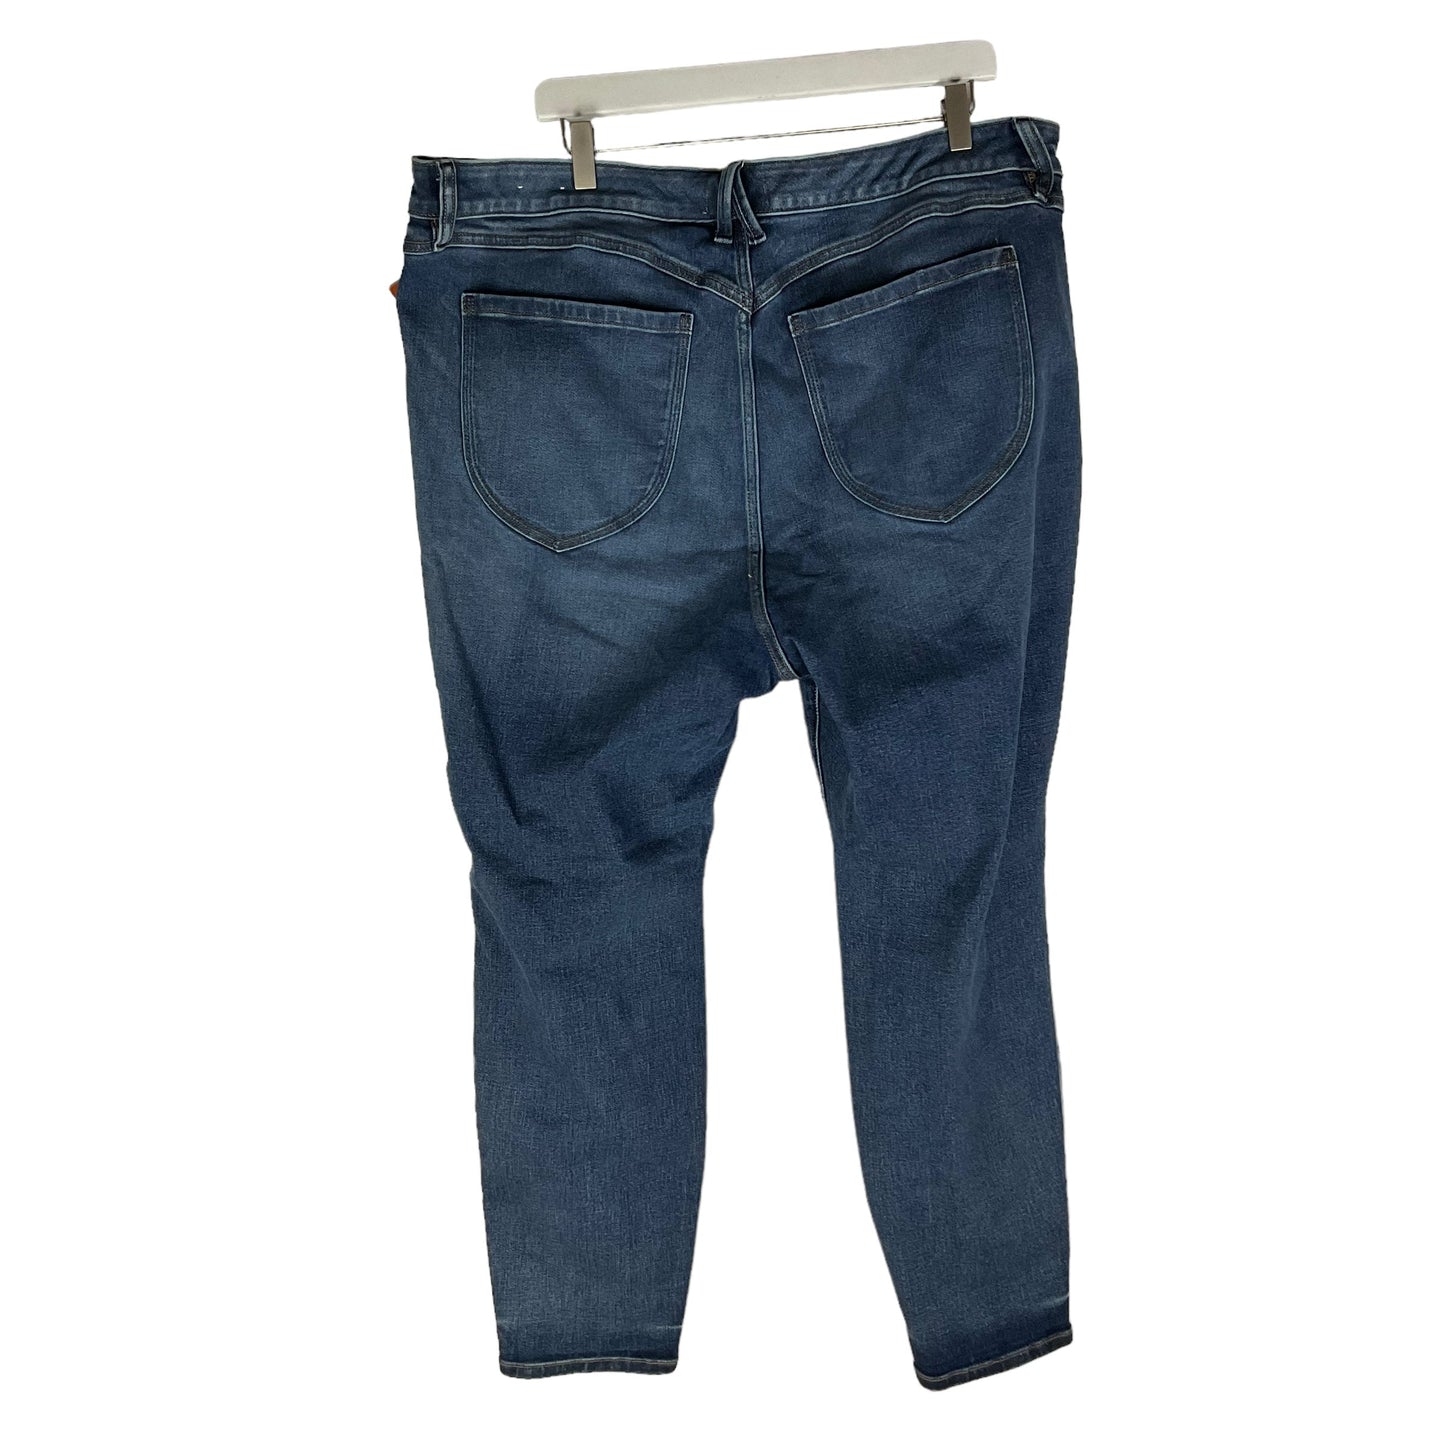 Jeans Skinny By Lane Bryant  Size: 2x